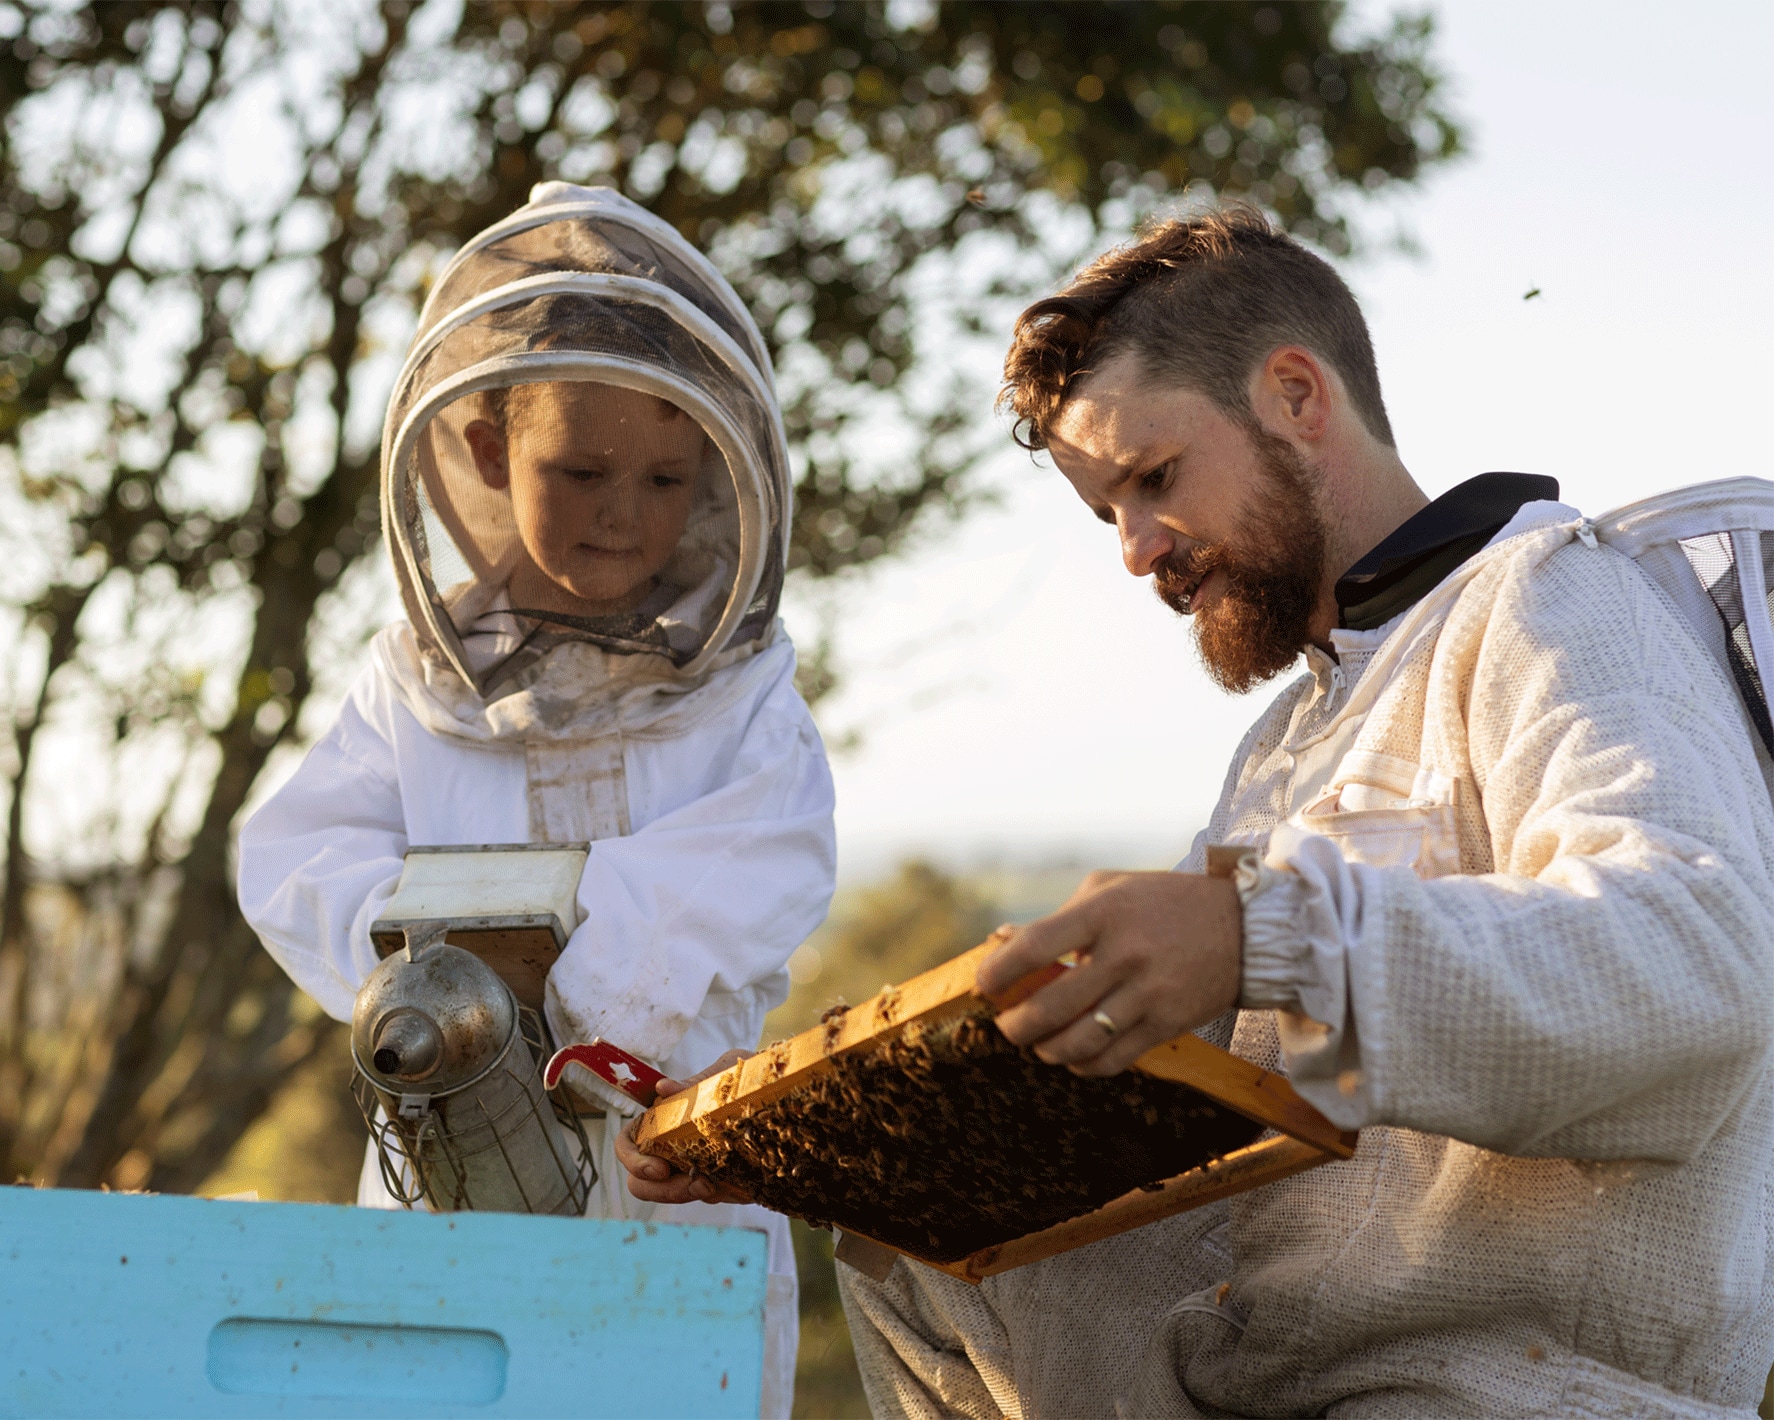 A beekeeper checks a beehive